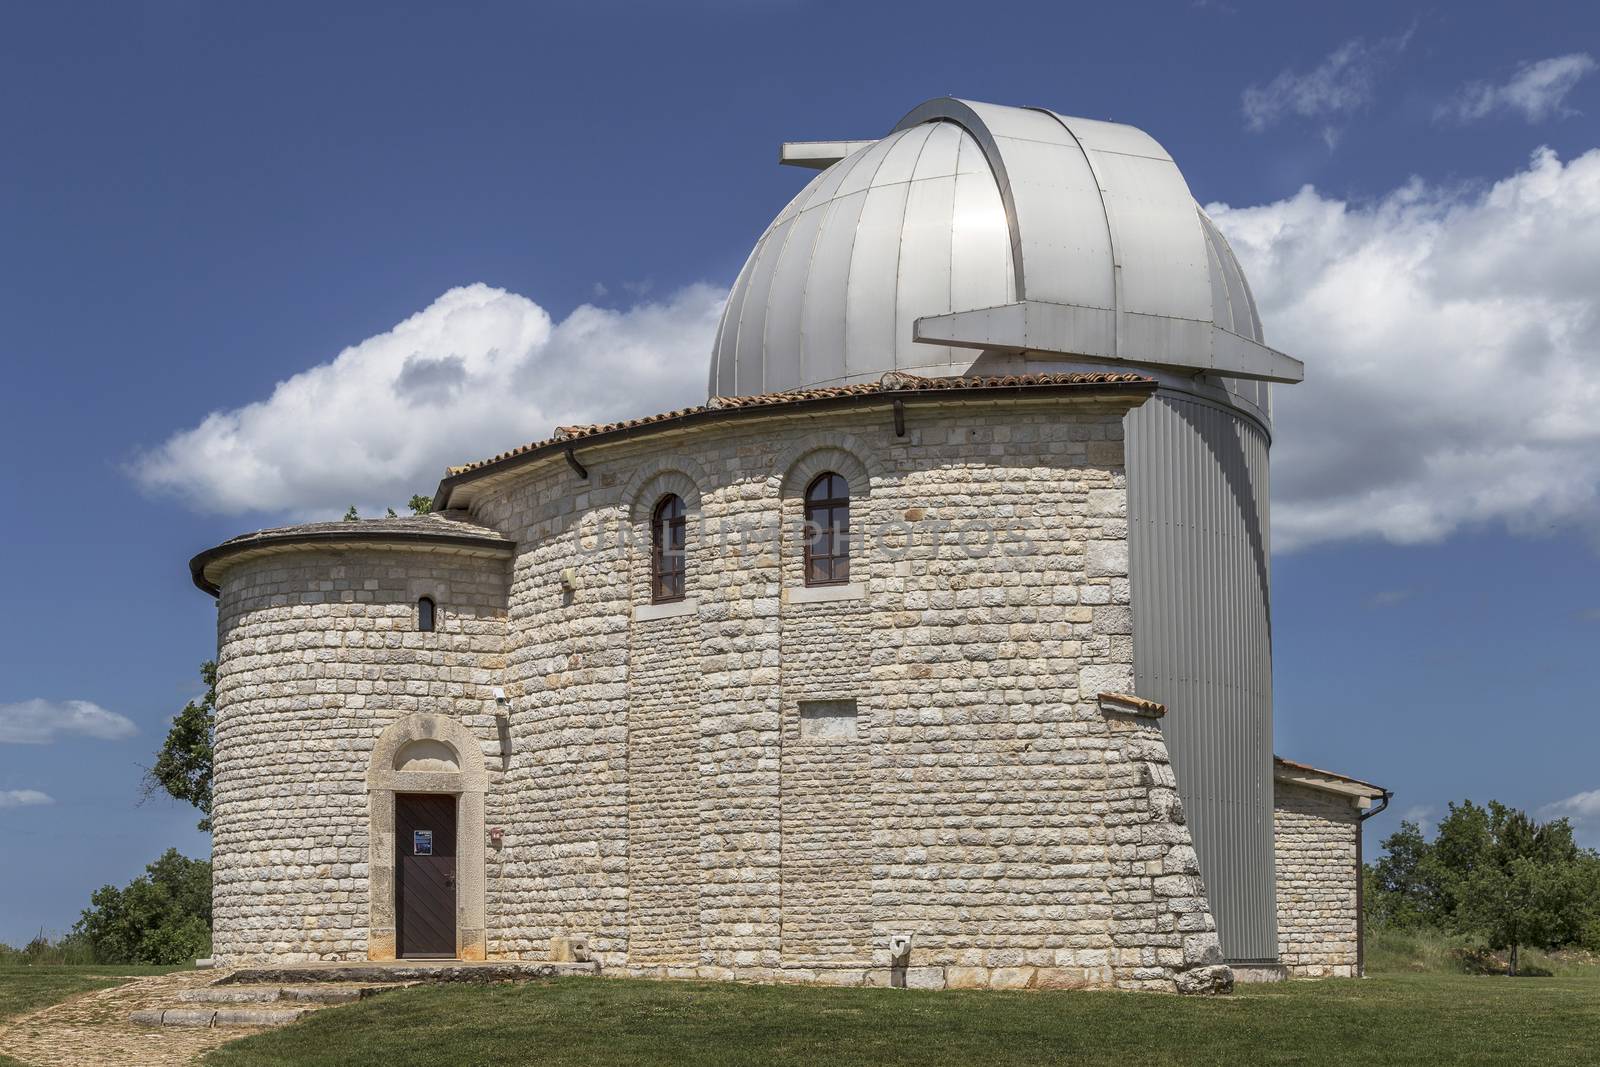 Star observatory and metal dome, Tican - Visnjan, Istria, Croatia by sewer12